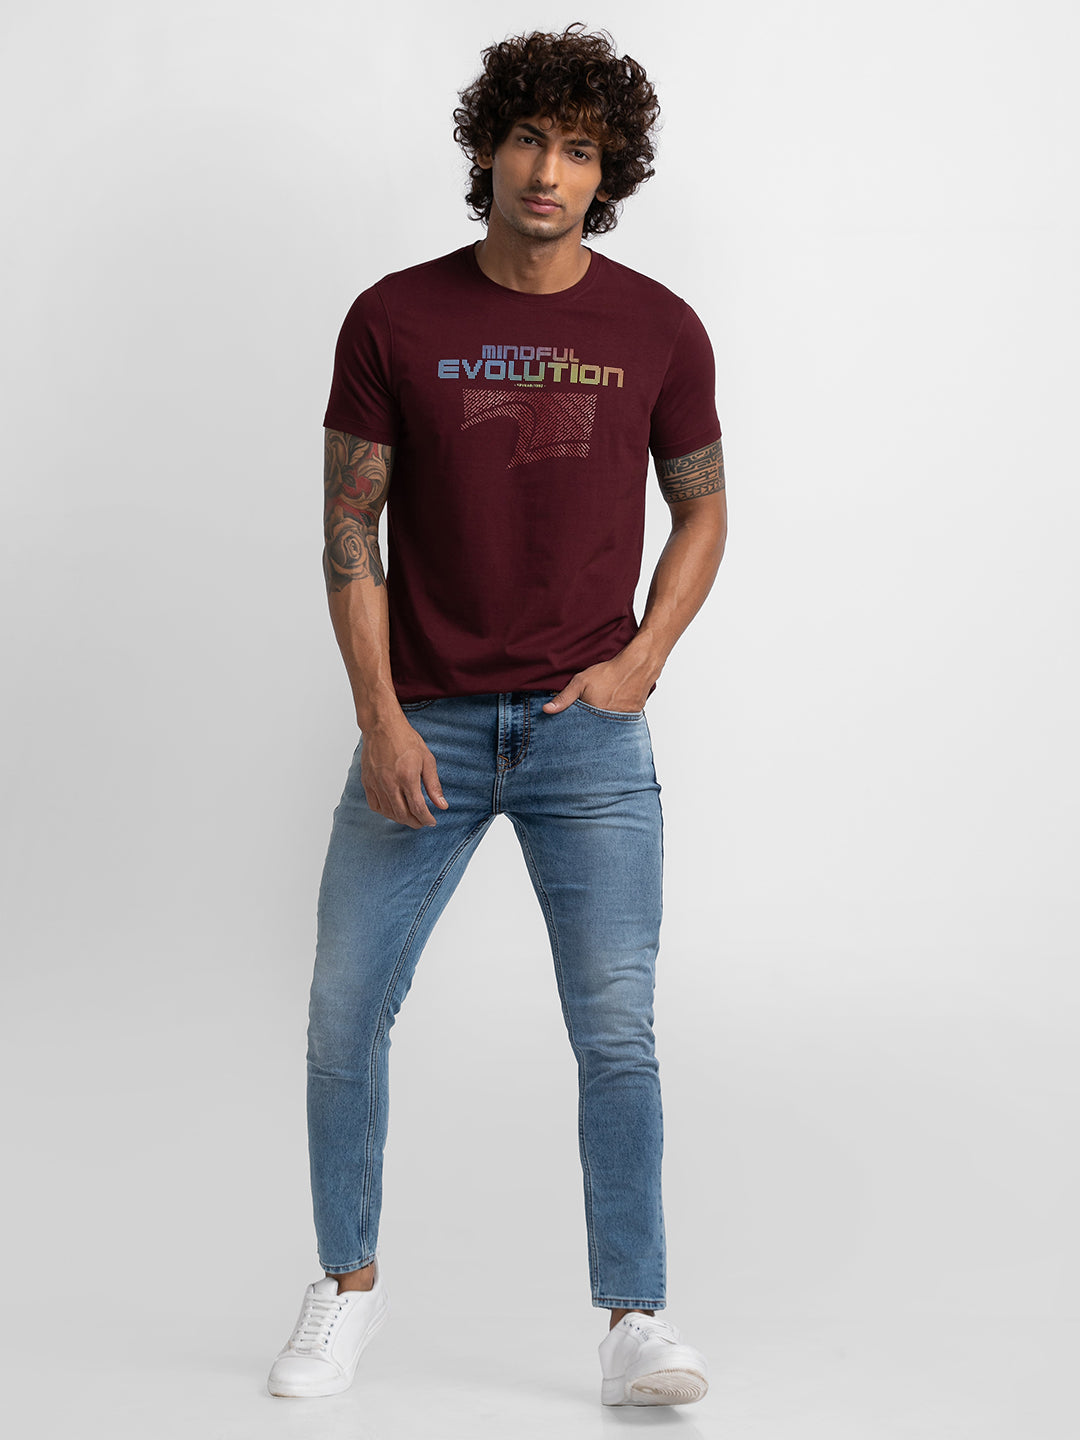 Spykar Wine Cotton Half Sleeve Printed Casual T-Shirt For Men